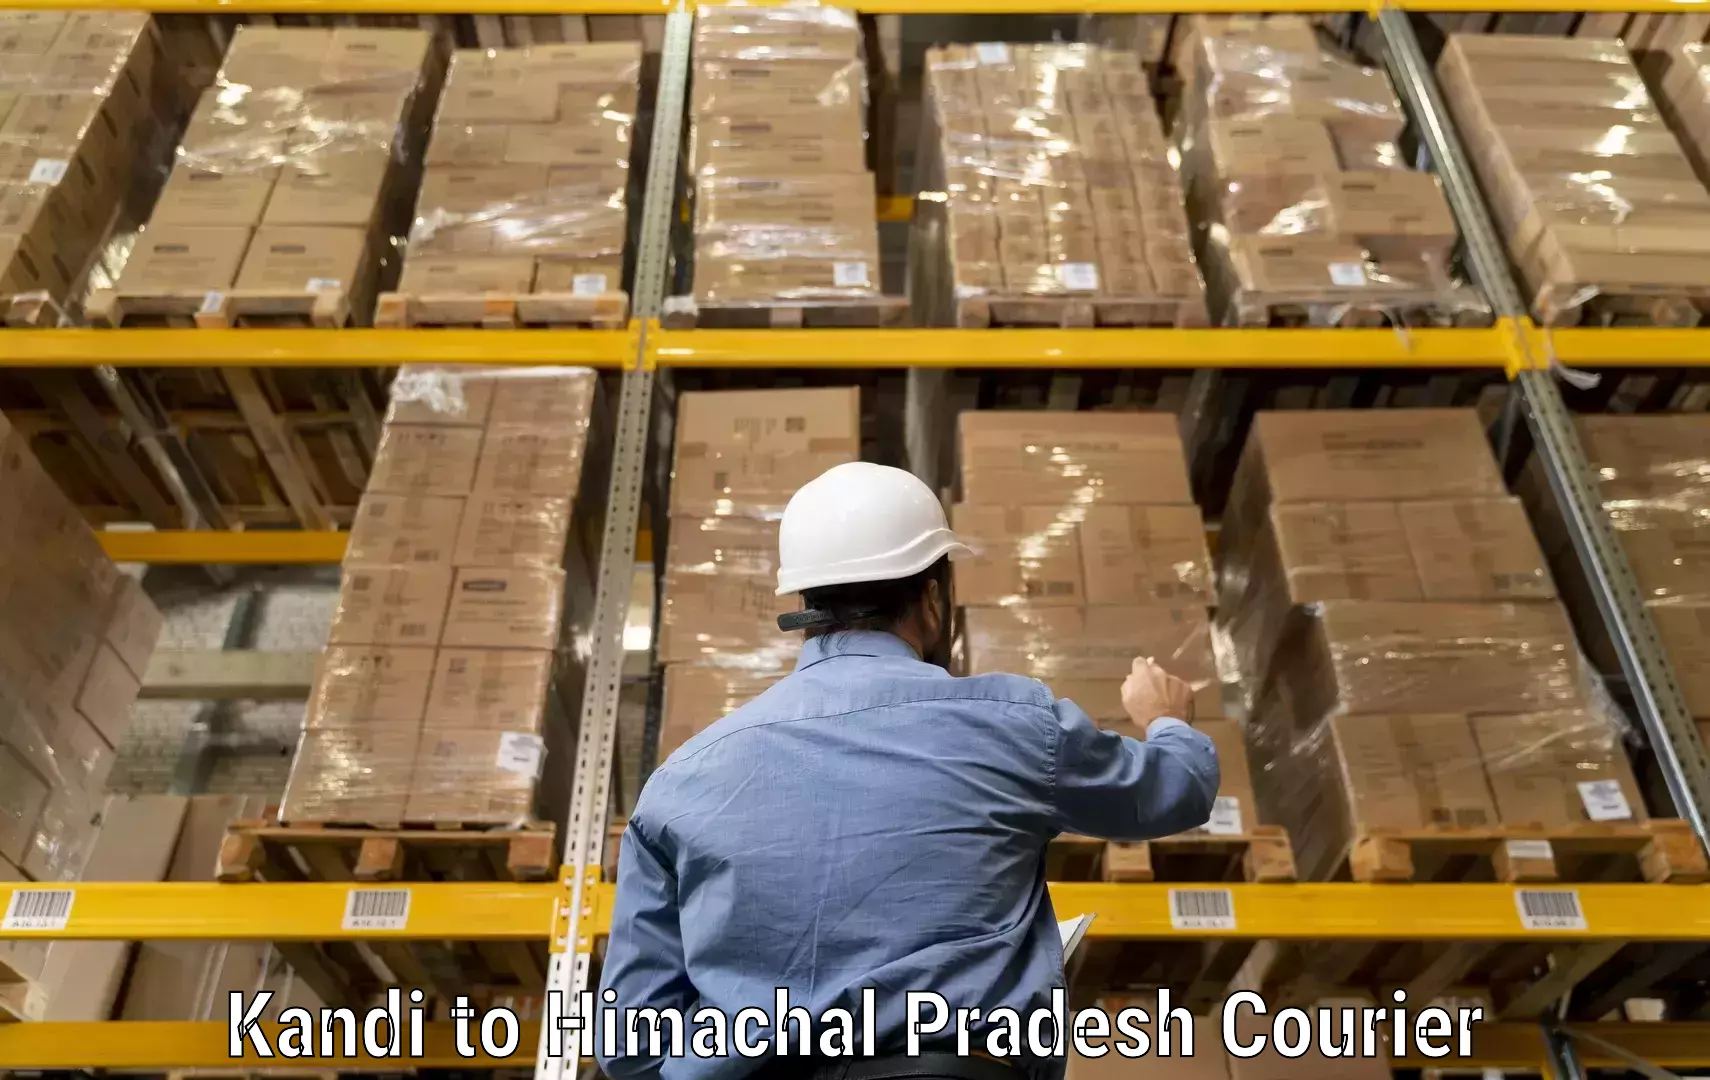 Professional courier handling Kandi to Baijnath